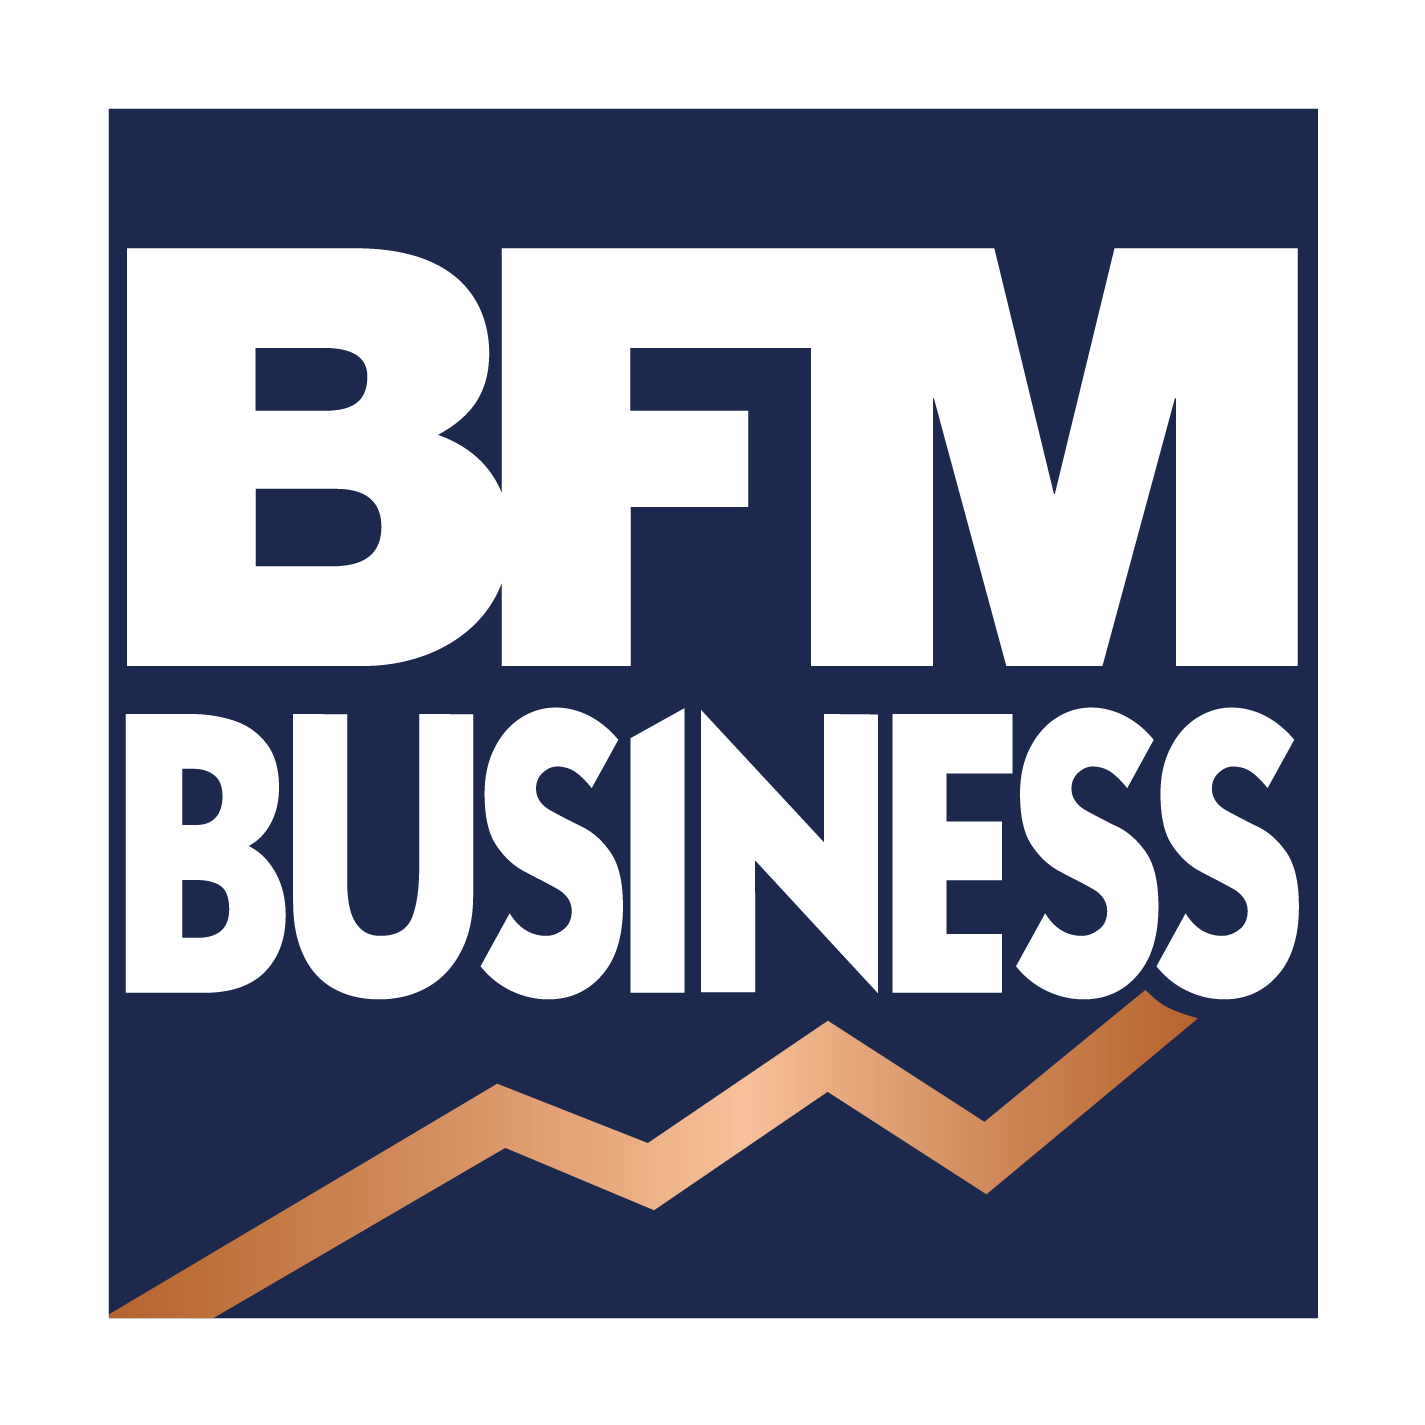 BFM Business